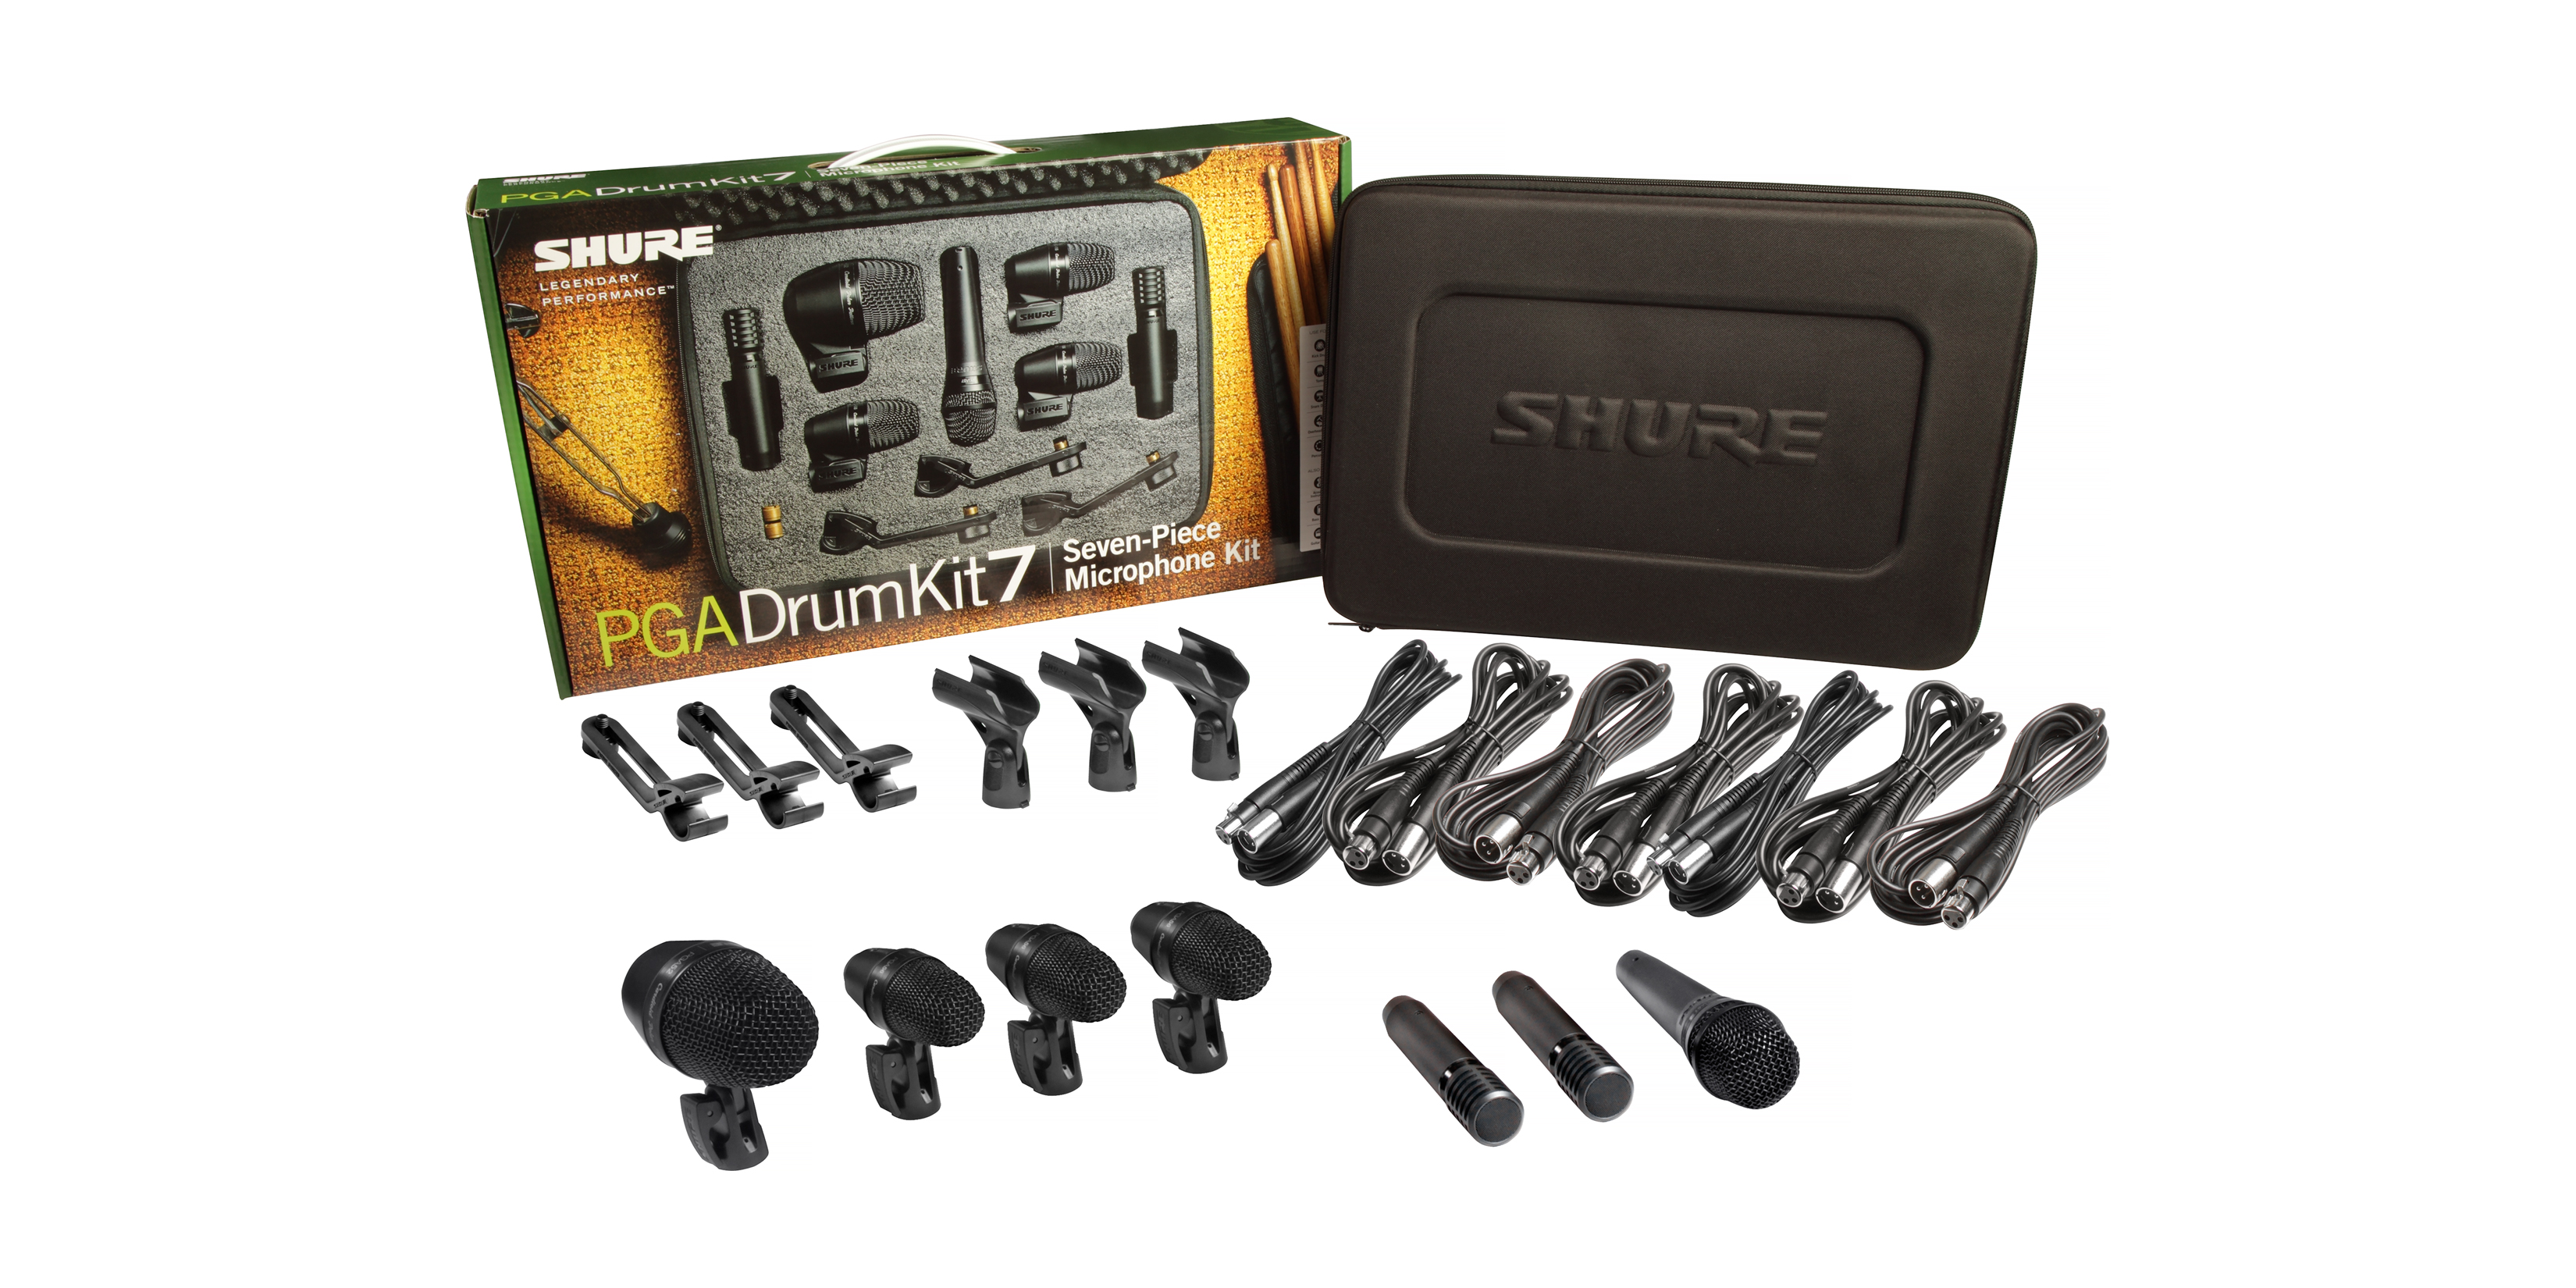 Shure Pga Drumkit 7 - Set de micrófonos con cables - Variation 2